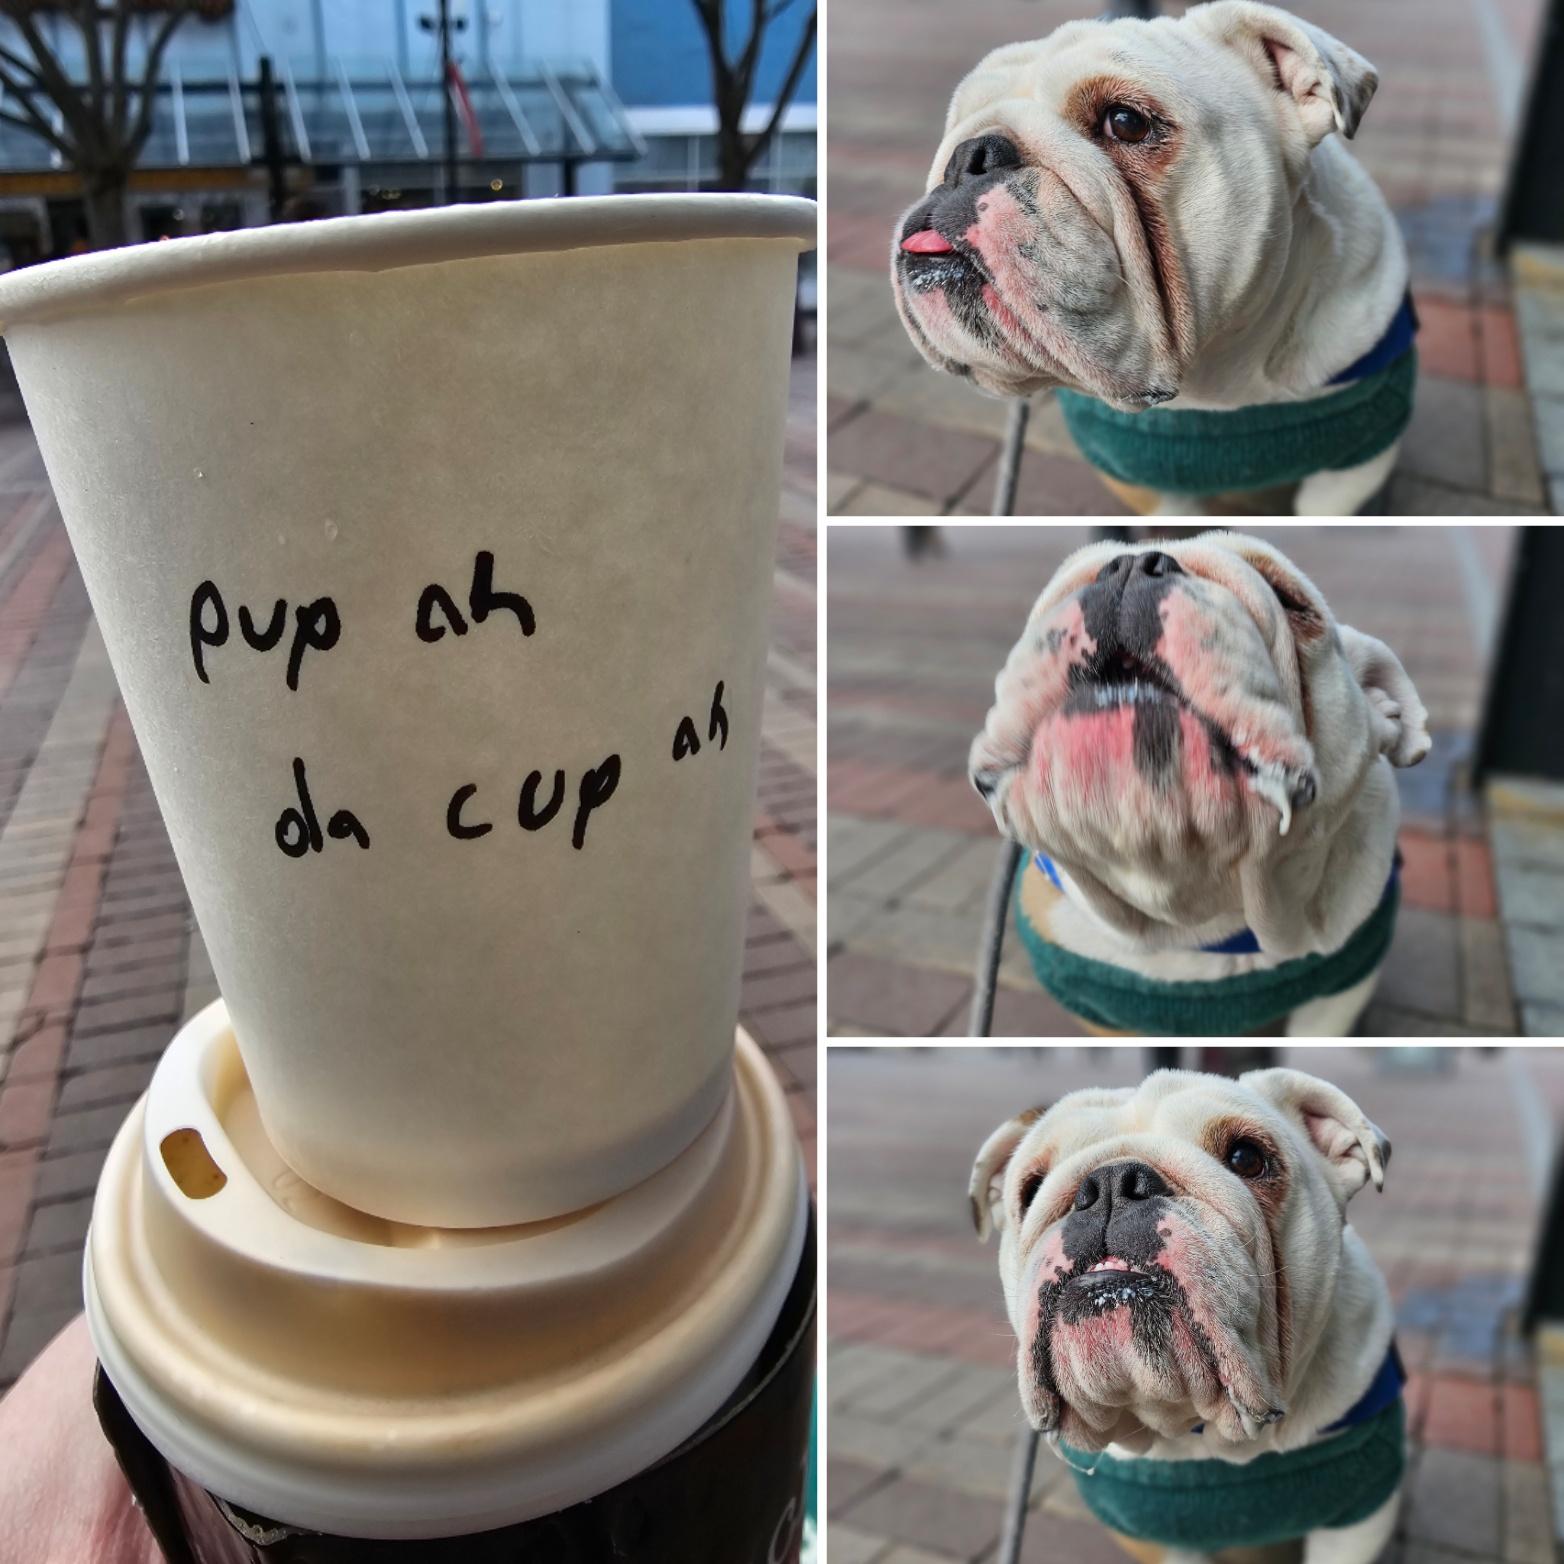 Watson’s Pup-ah-Da-Cup-ah